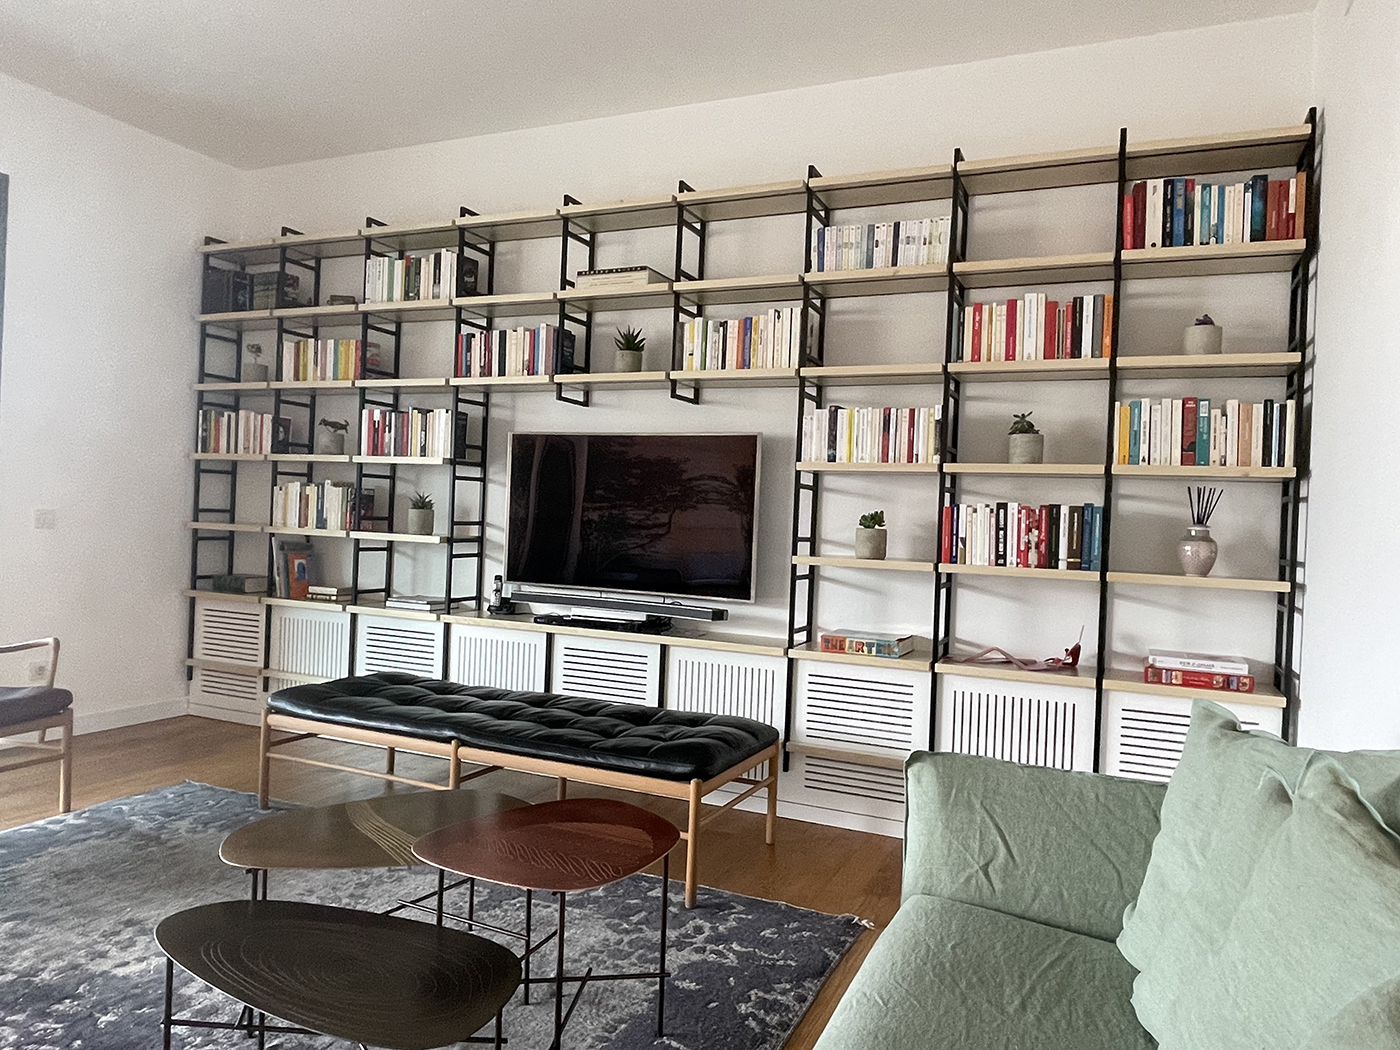 MDDM-Architects-Studio-Library-Bookshelves-furniture-product-design-steel-wood